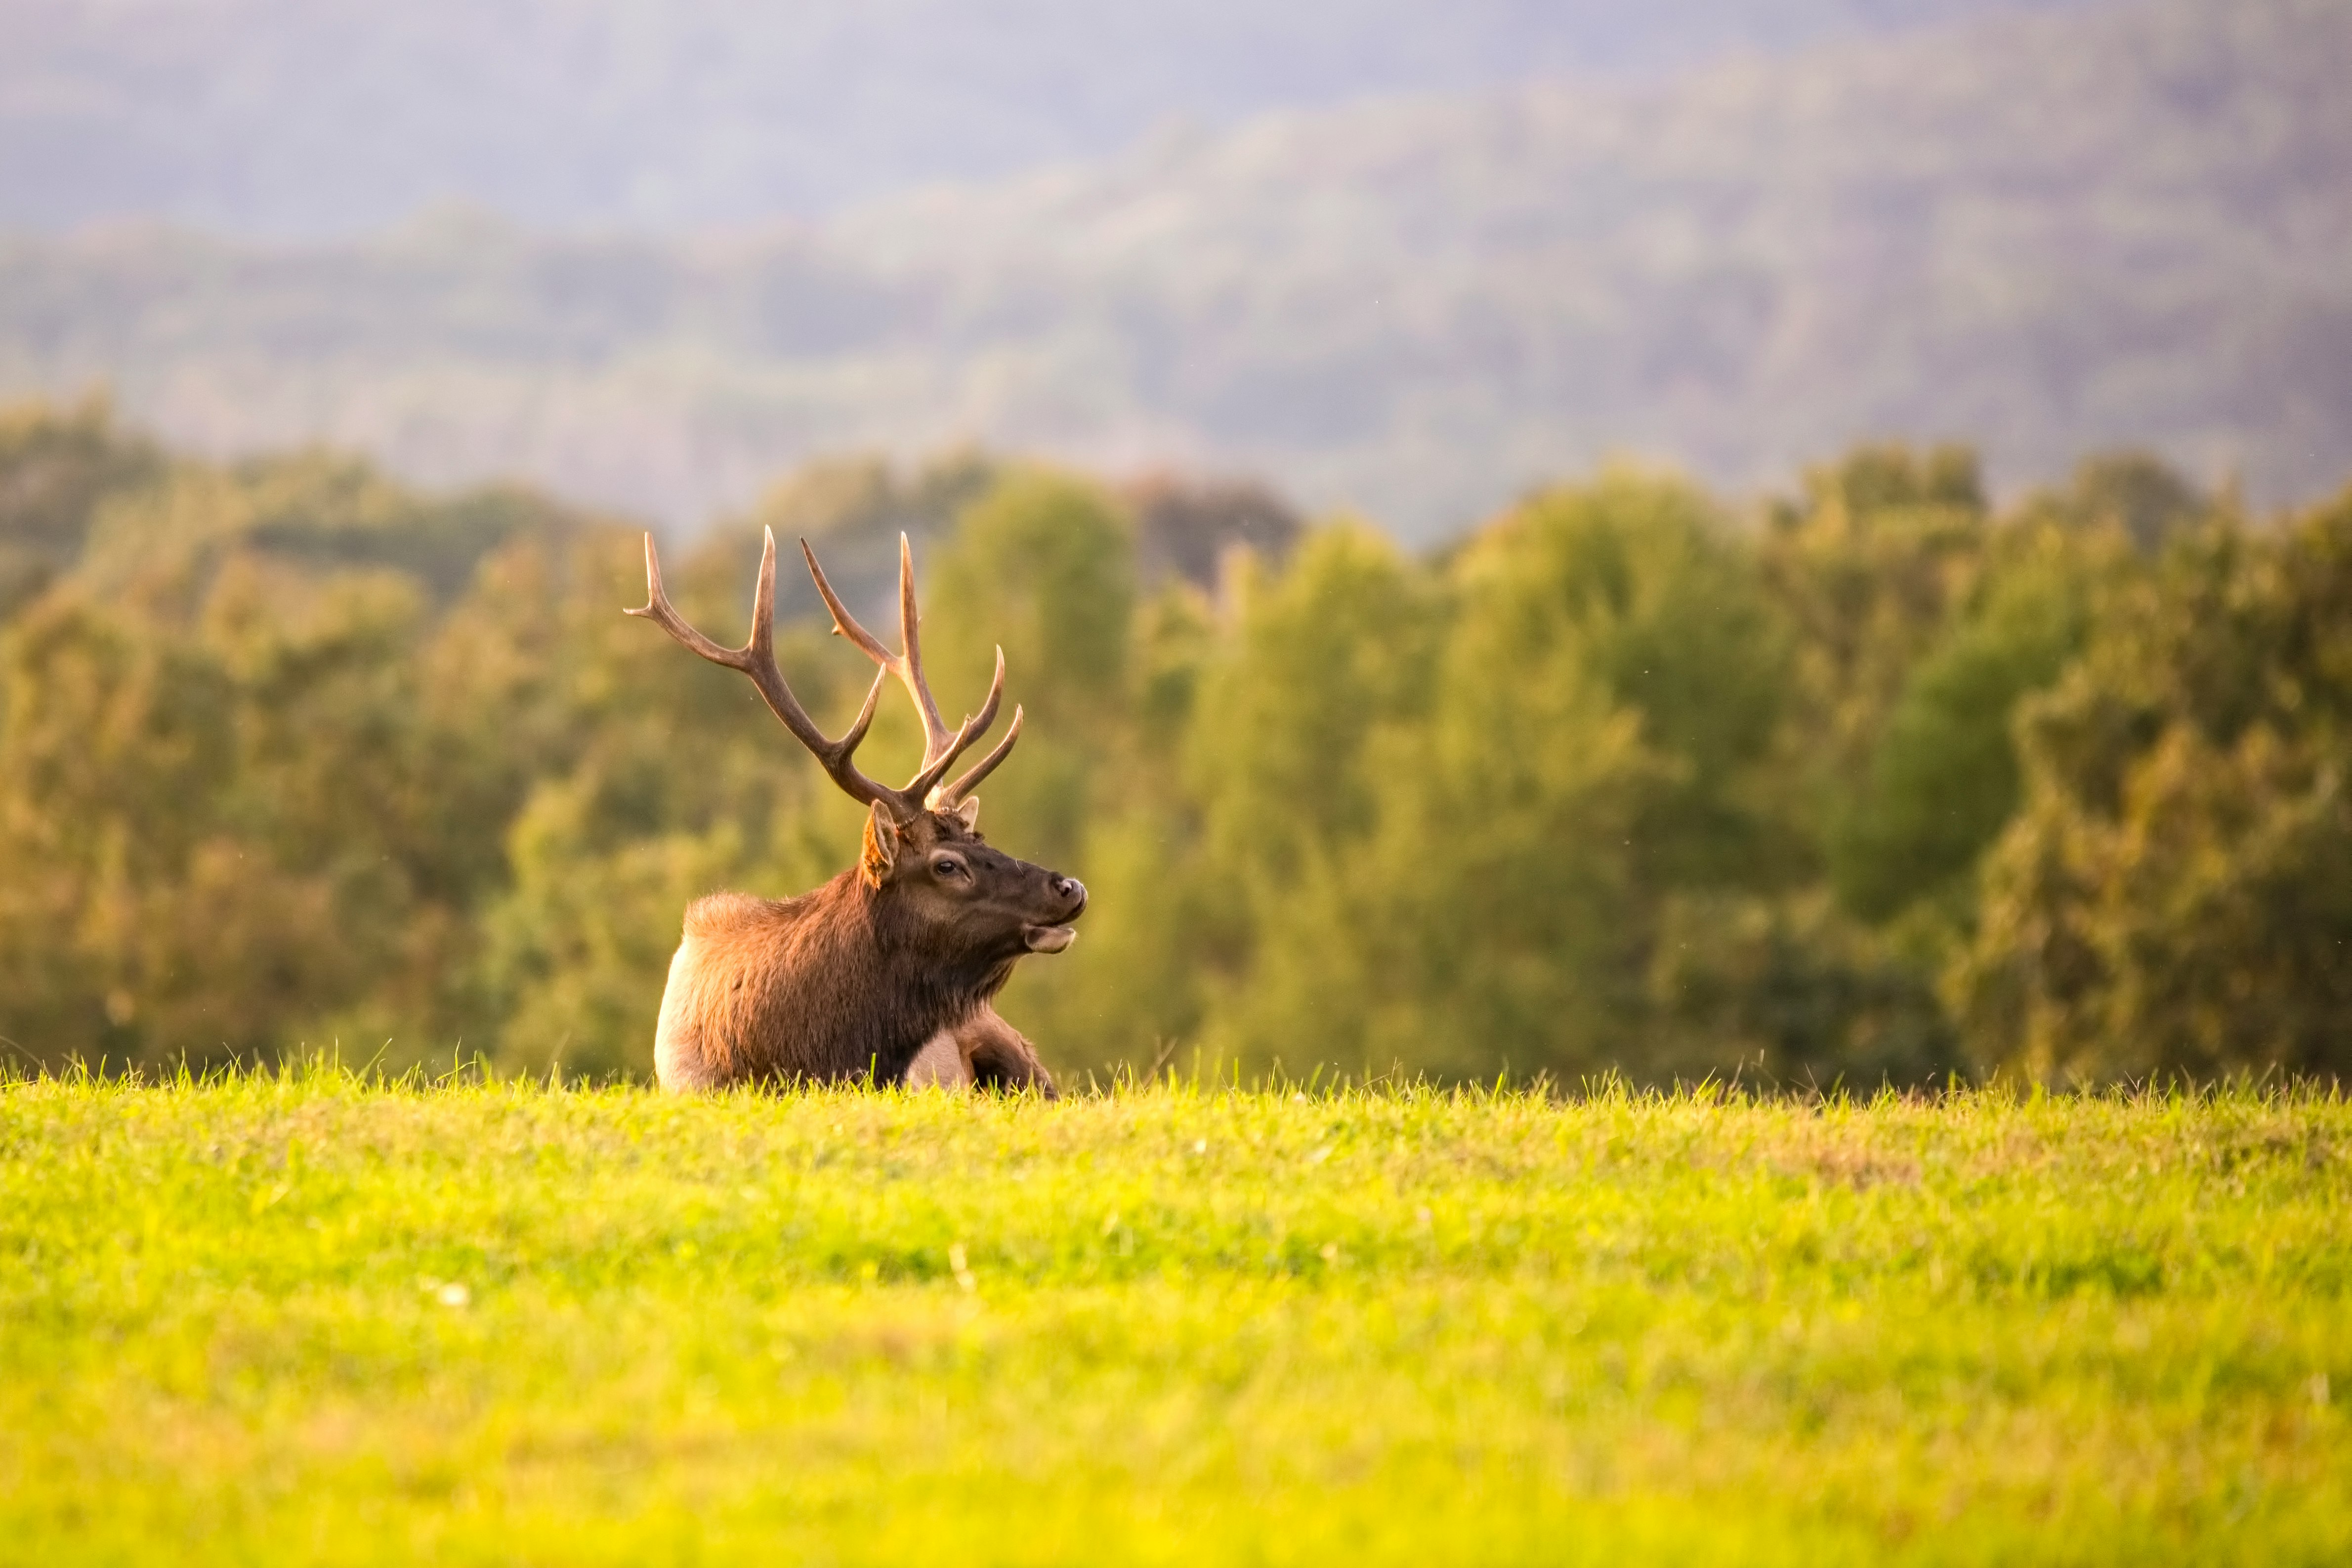 moose on grass during daytime